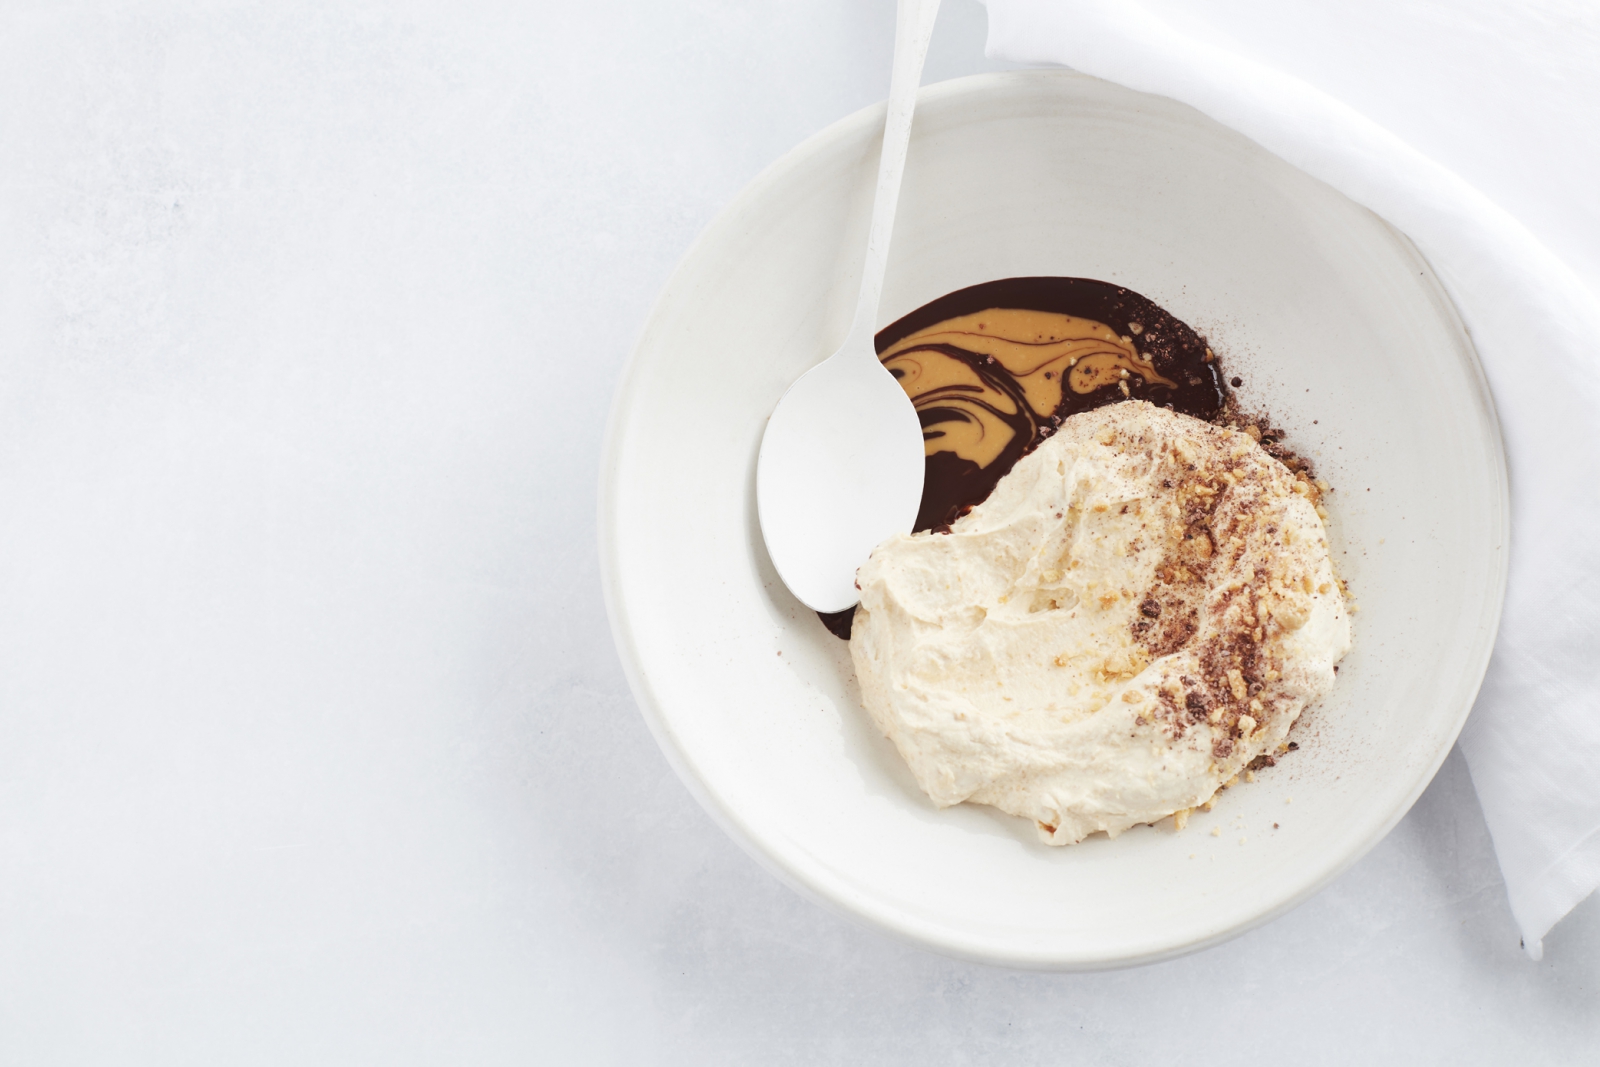 ‘Nutella’ Mousse with Chocolate Hazelnut Keto Granola (Vegan, Keto, Low Carb)